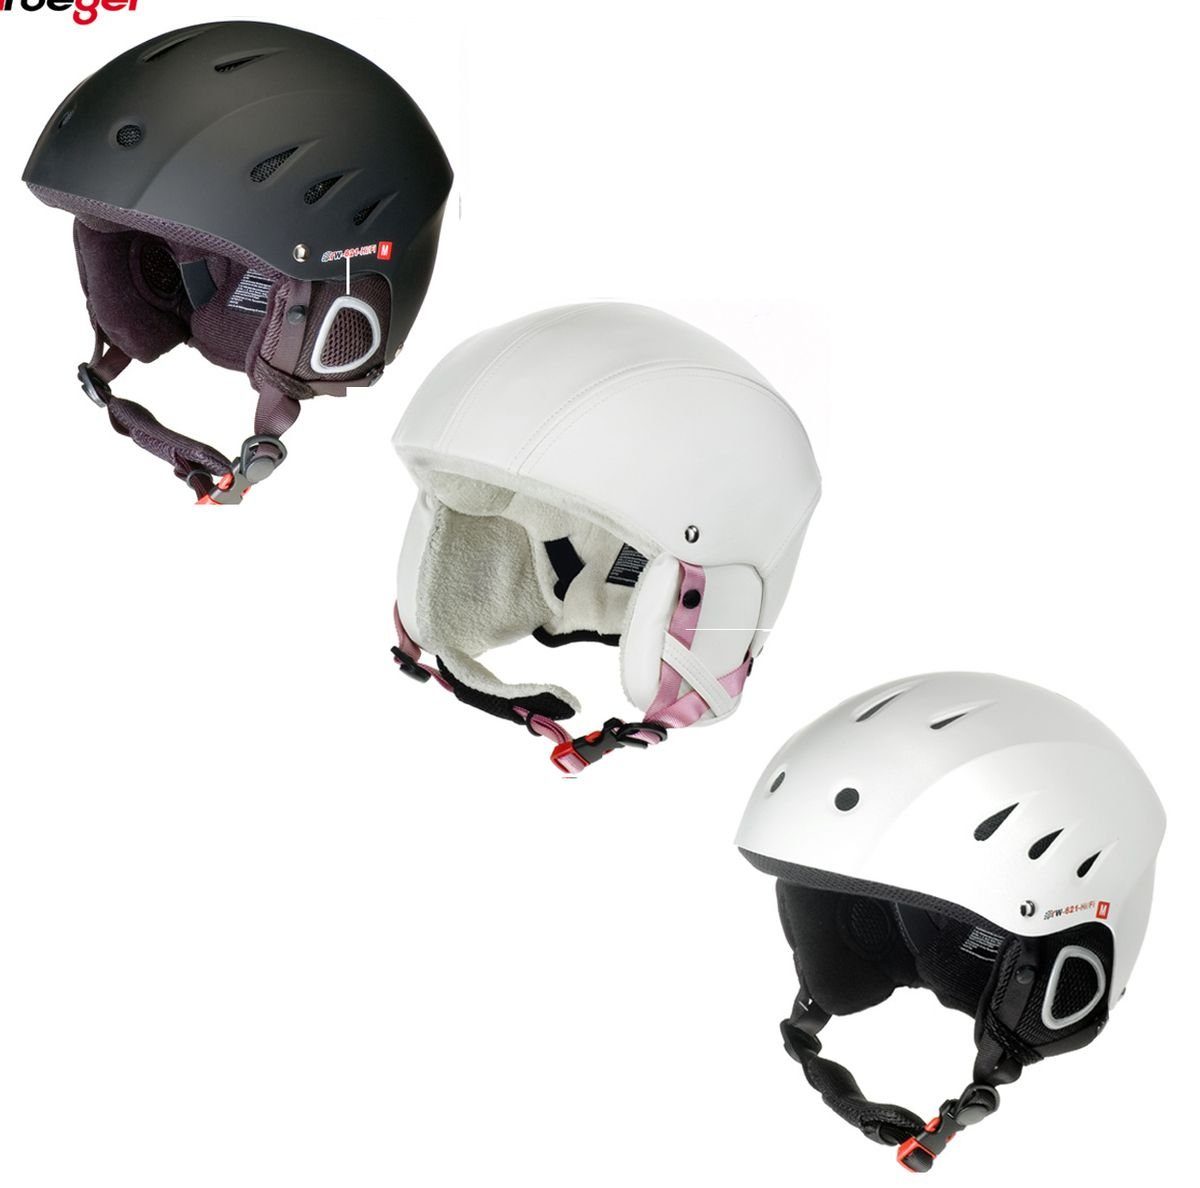 BergsportRW-621-HIFI Skihelm Snowboardhelm RW-621 Ski Skisport Skihelm Wh/Pu Lautsprechern rueger-helmets White/PU Snowboard XL mit